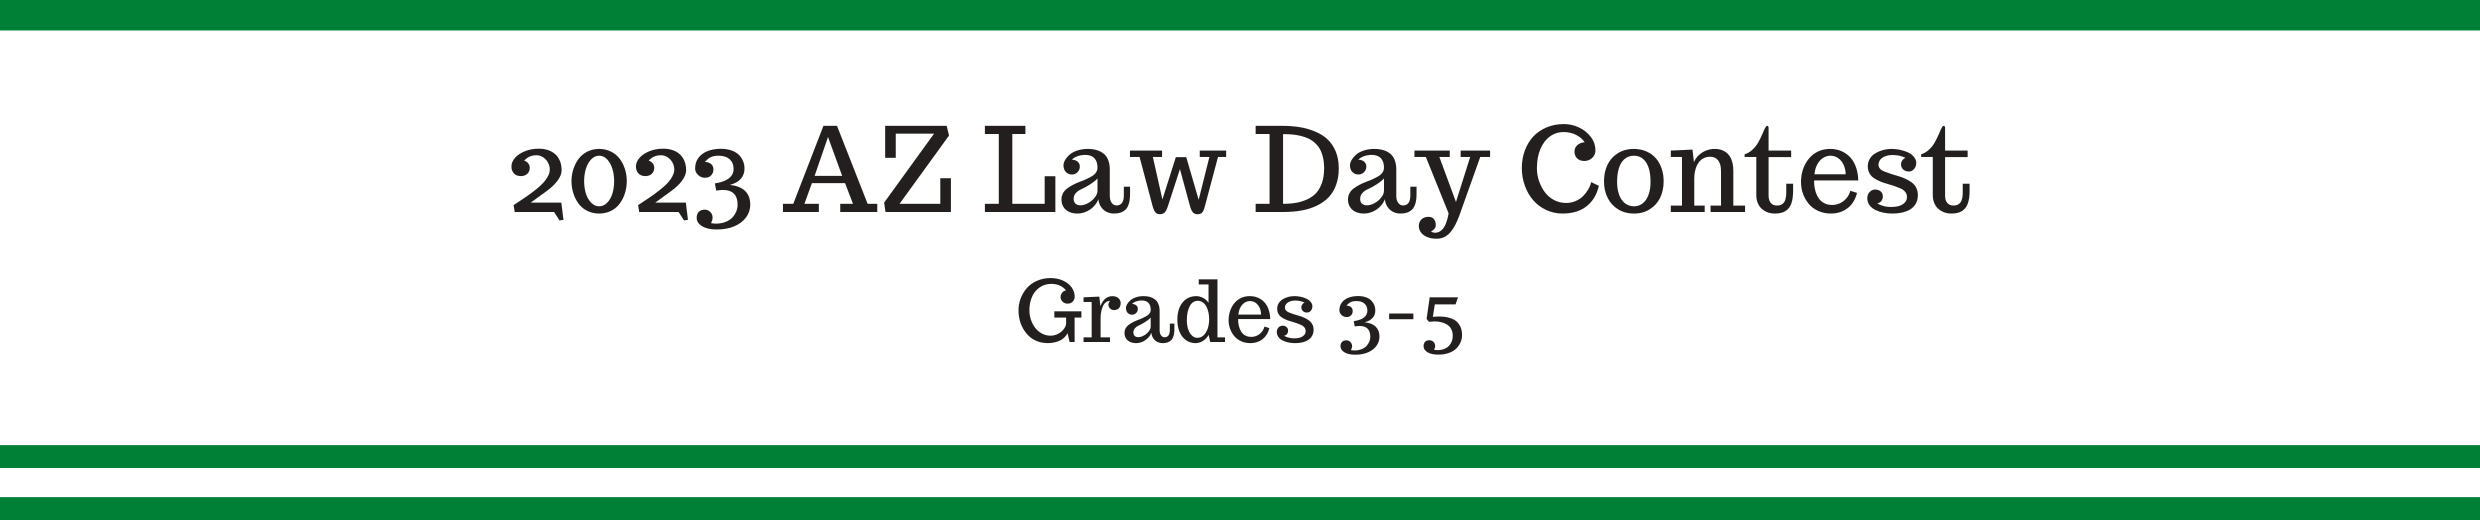 2023 AZ Law Day Contest Grades 3-5